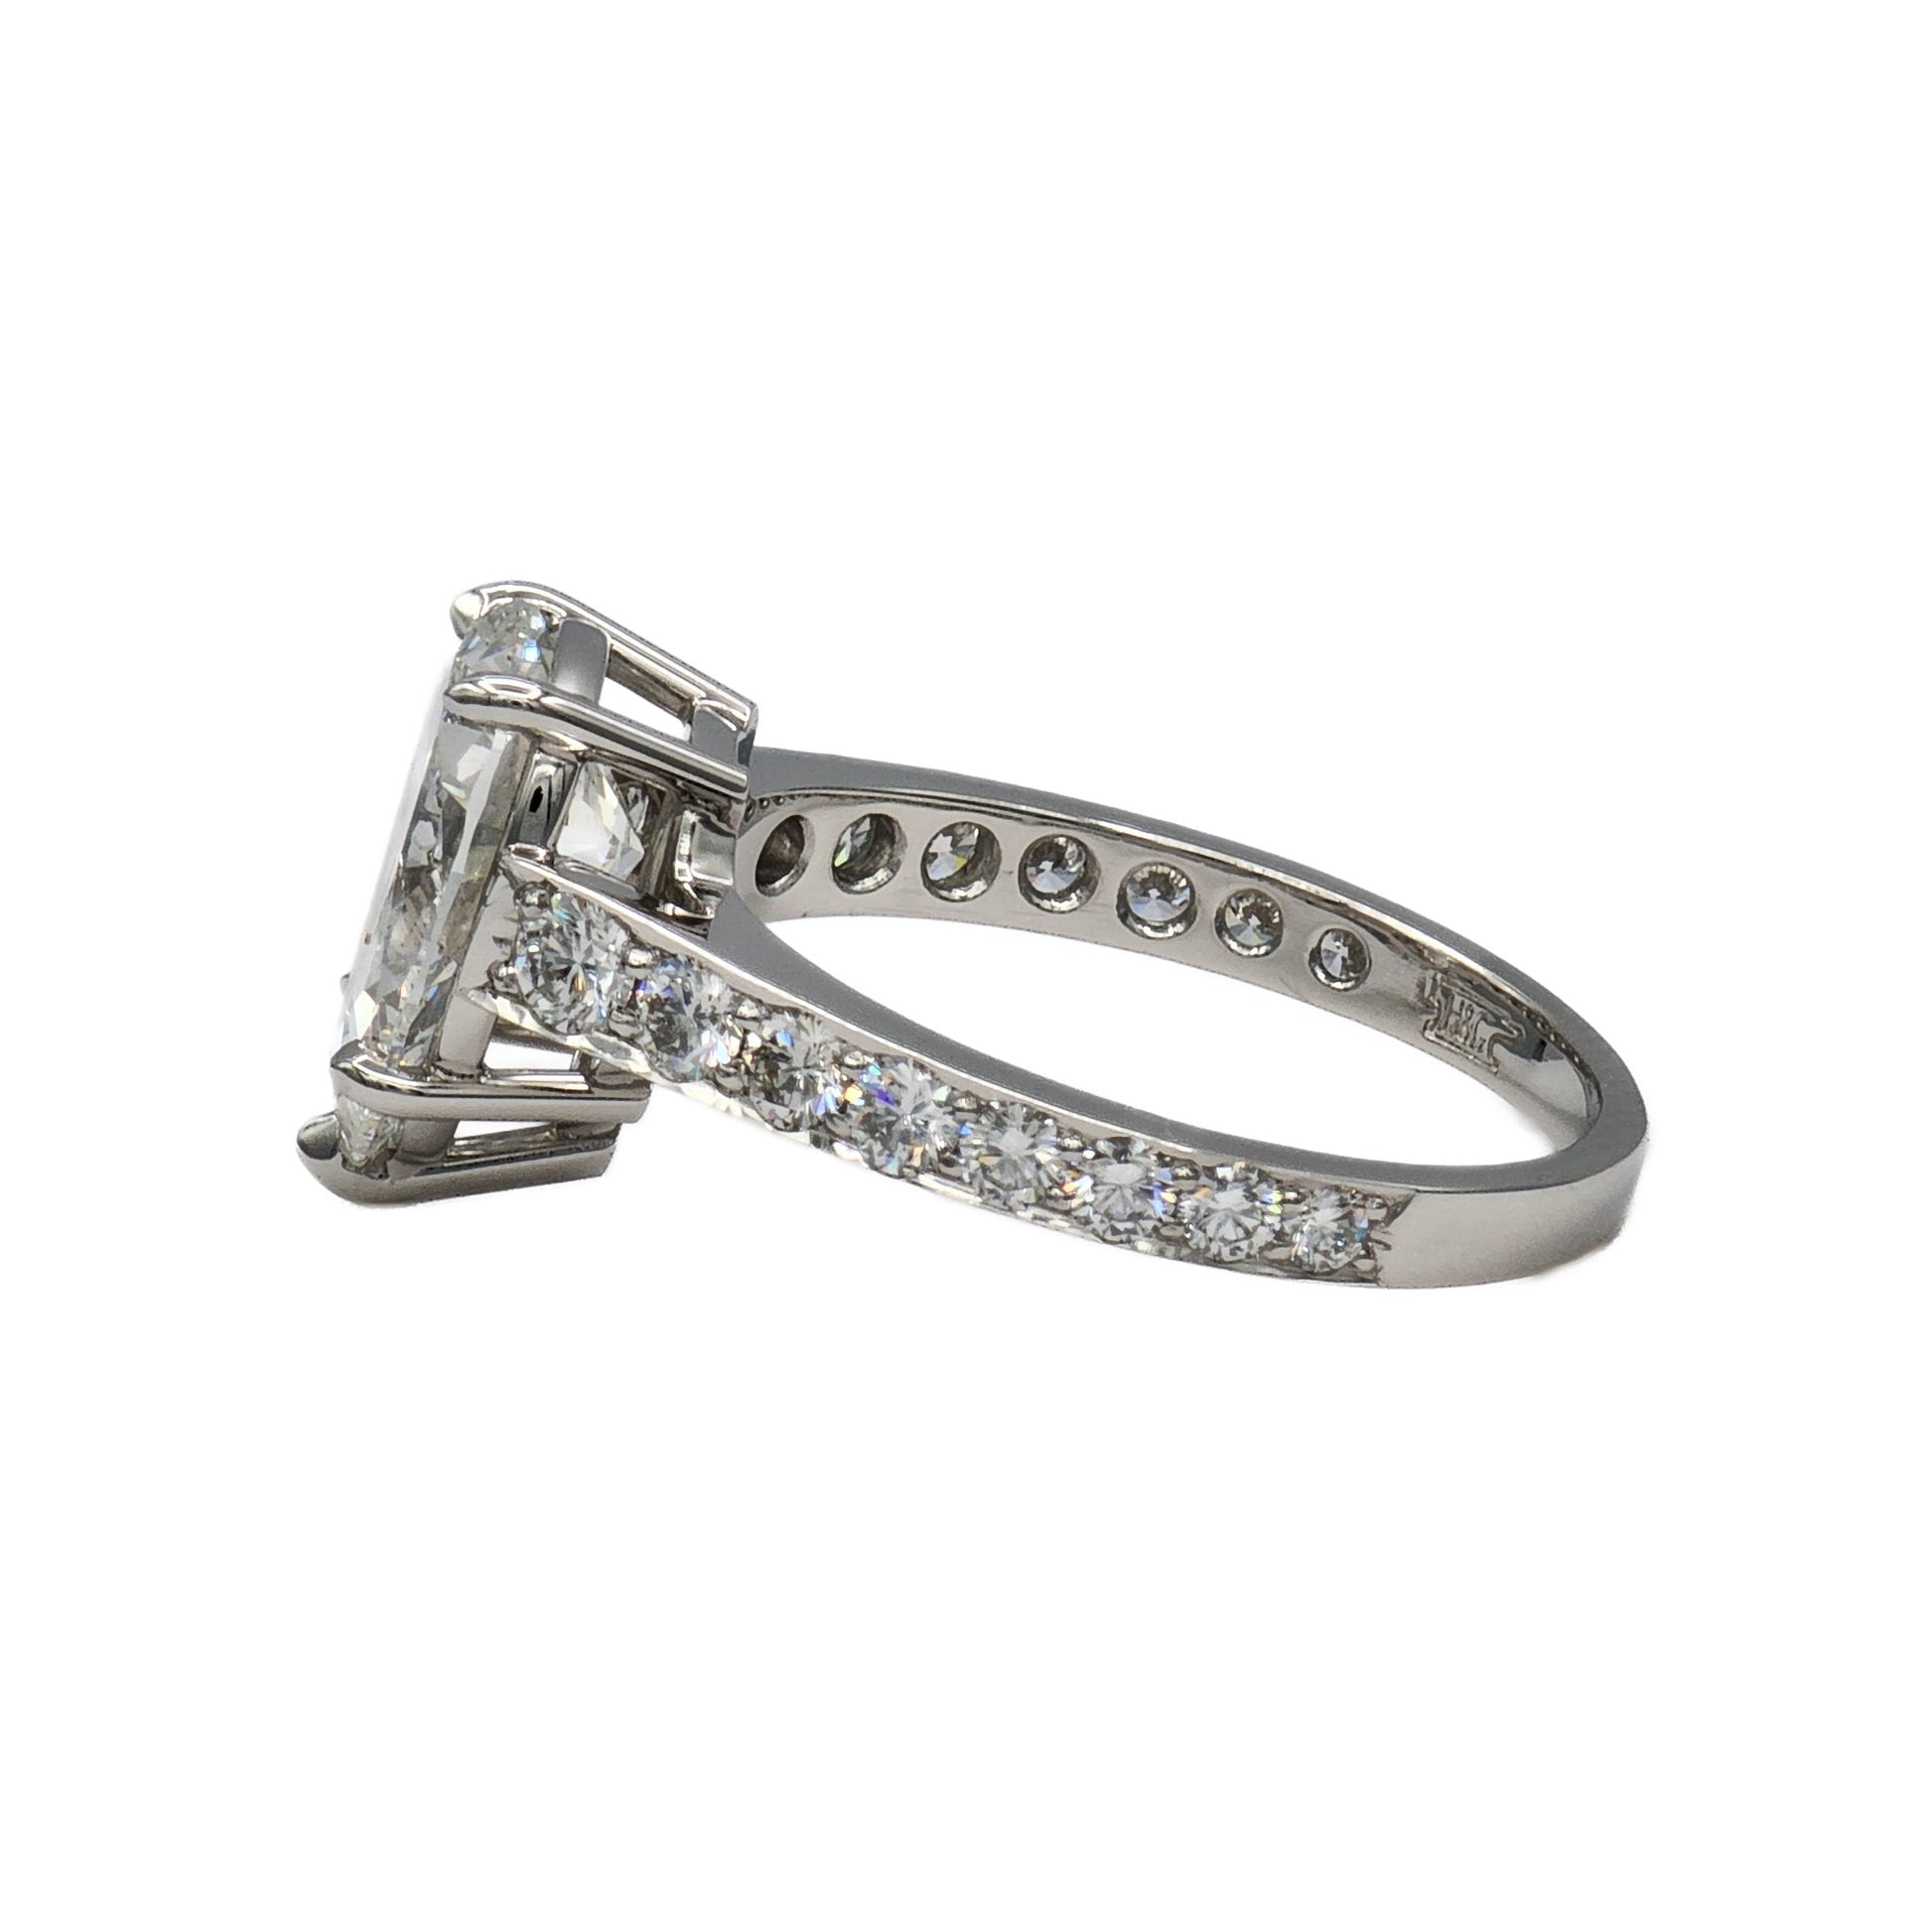 Platinum 3.33 Carat Pear Shape Diamond Ring